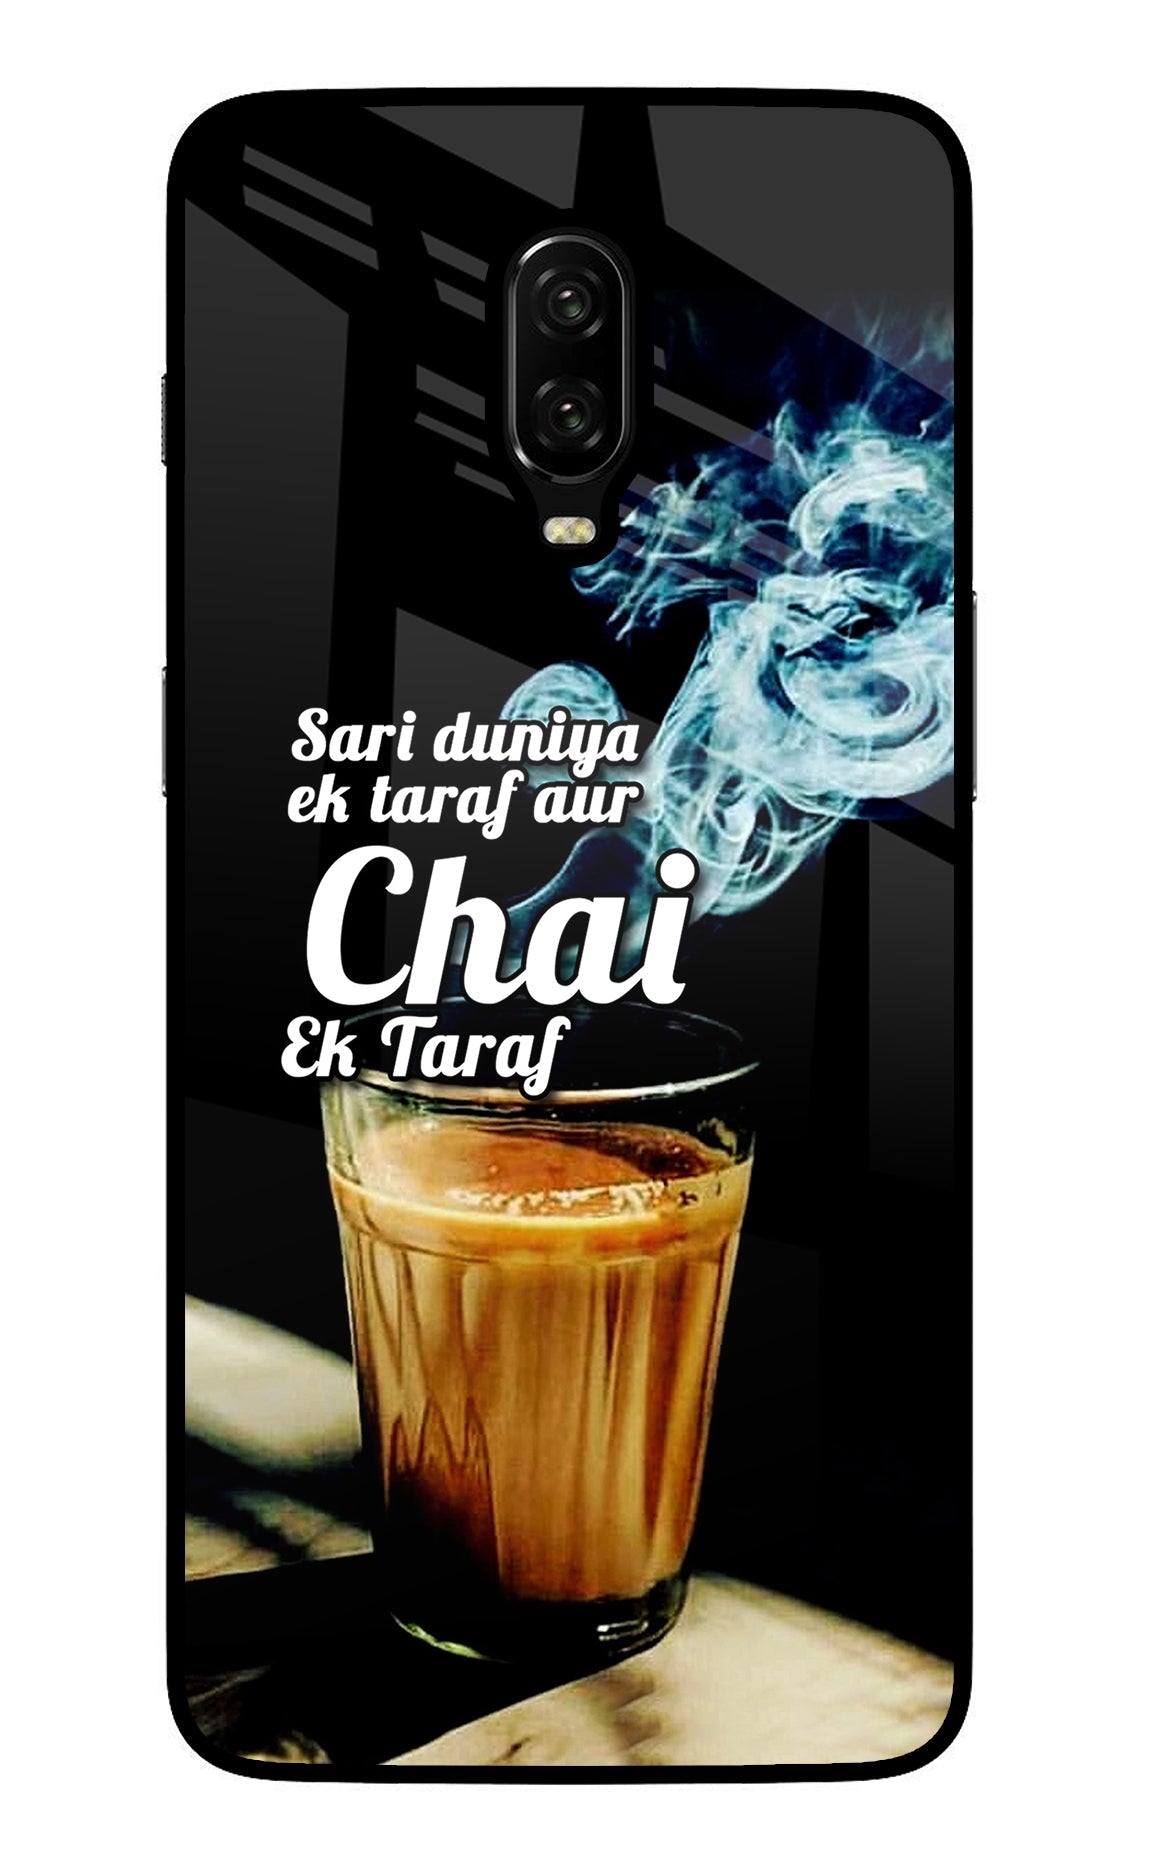 Chai Ek Taraf Quote Oneplus 6T Glass Case